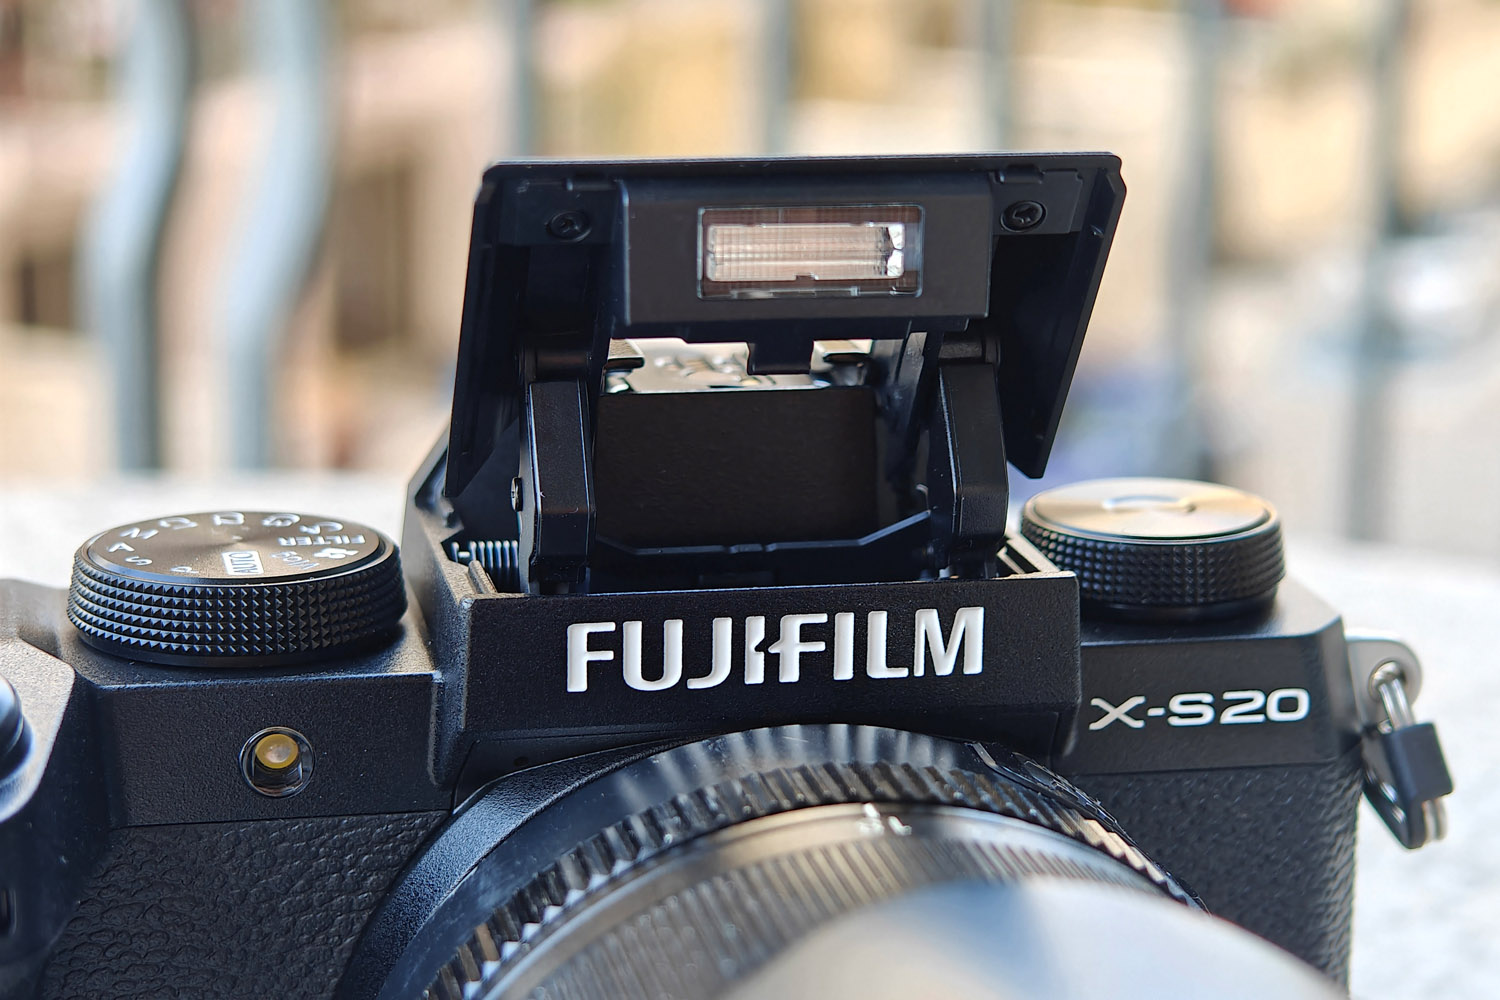 Fujifilm X-S20 hands-on pop up flash